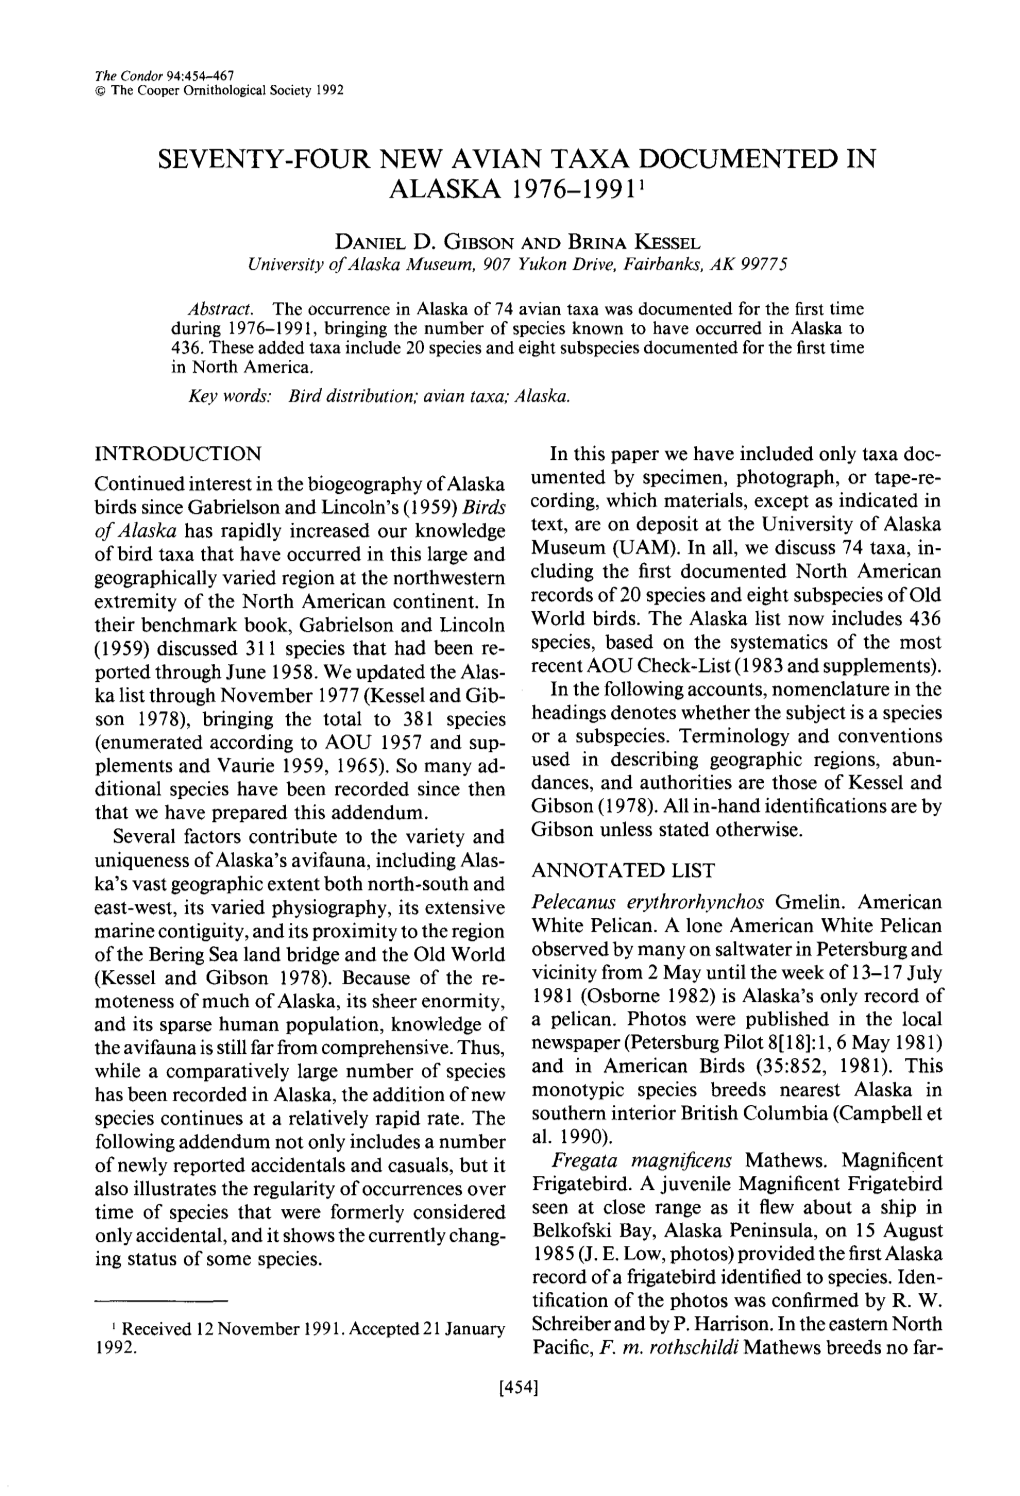 Seventy-Four New Avian Taxa Documented in Alaska 1976-1991’